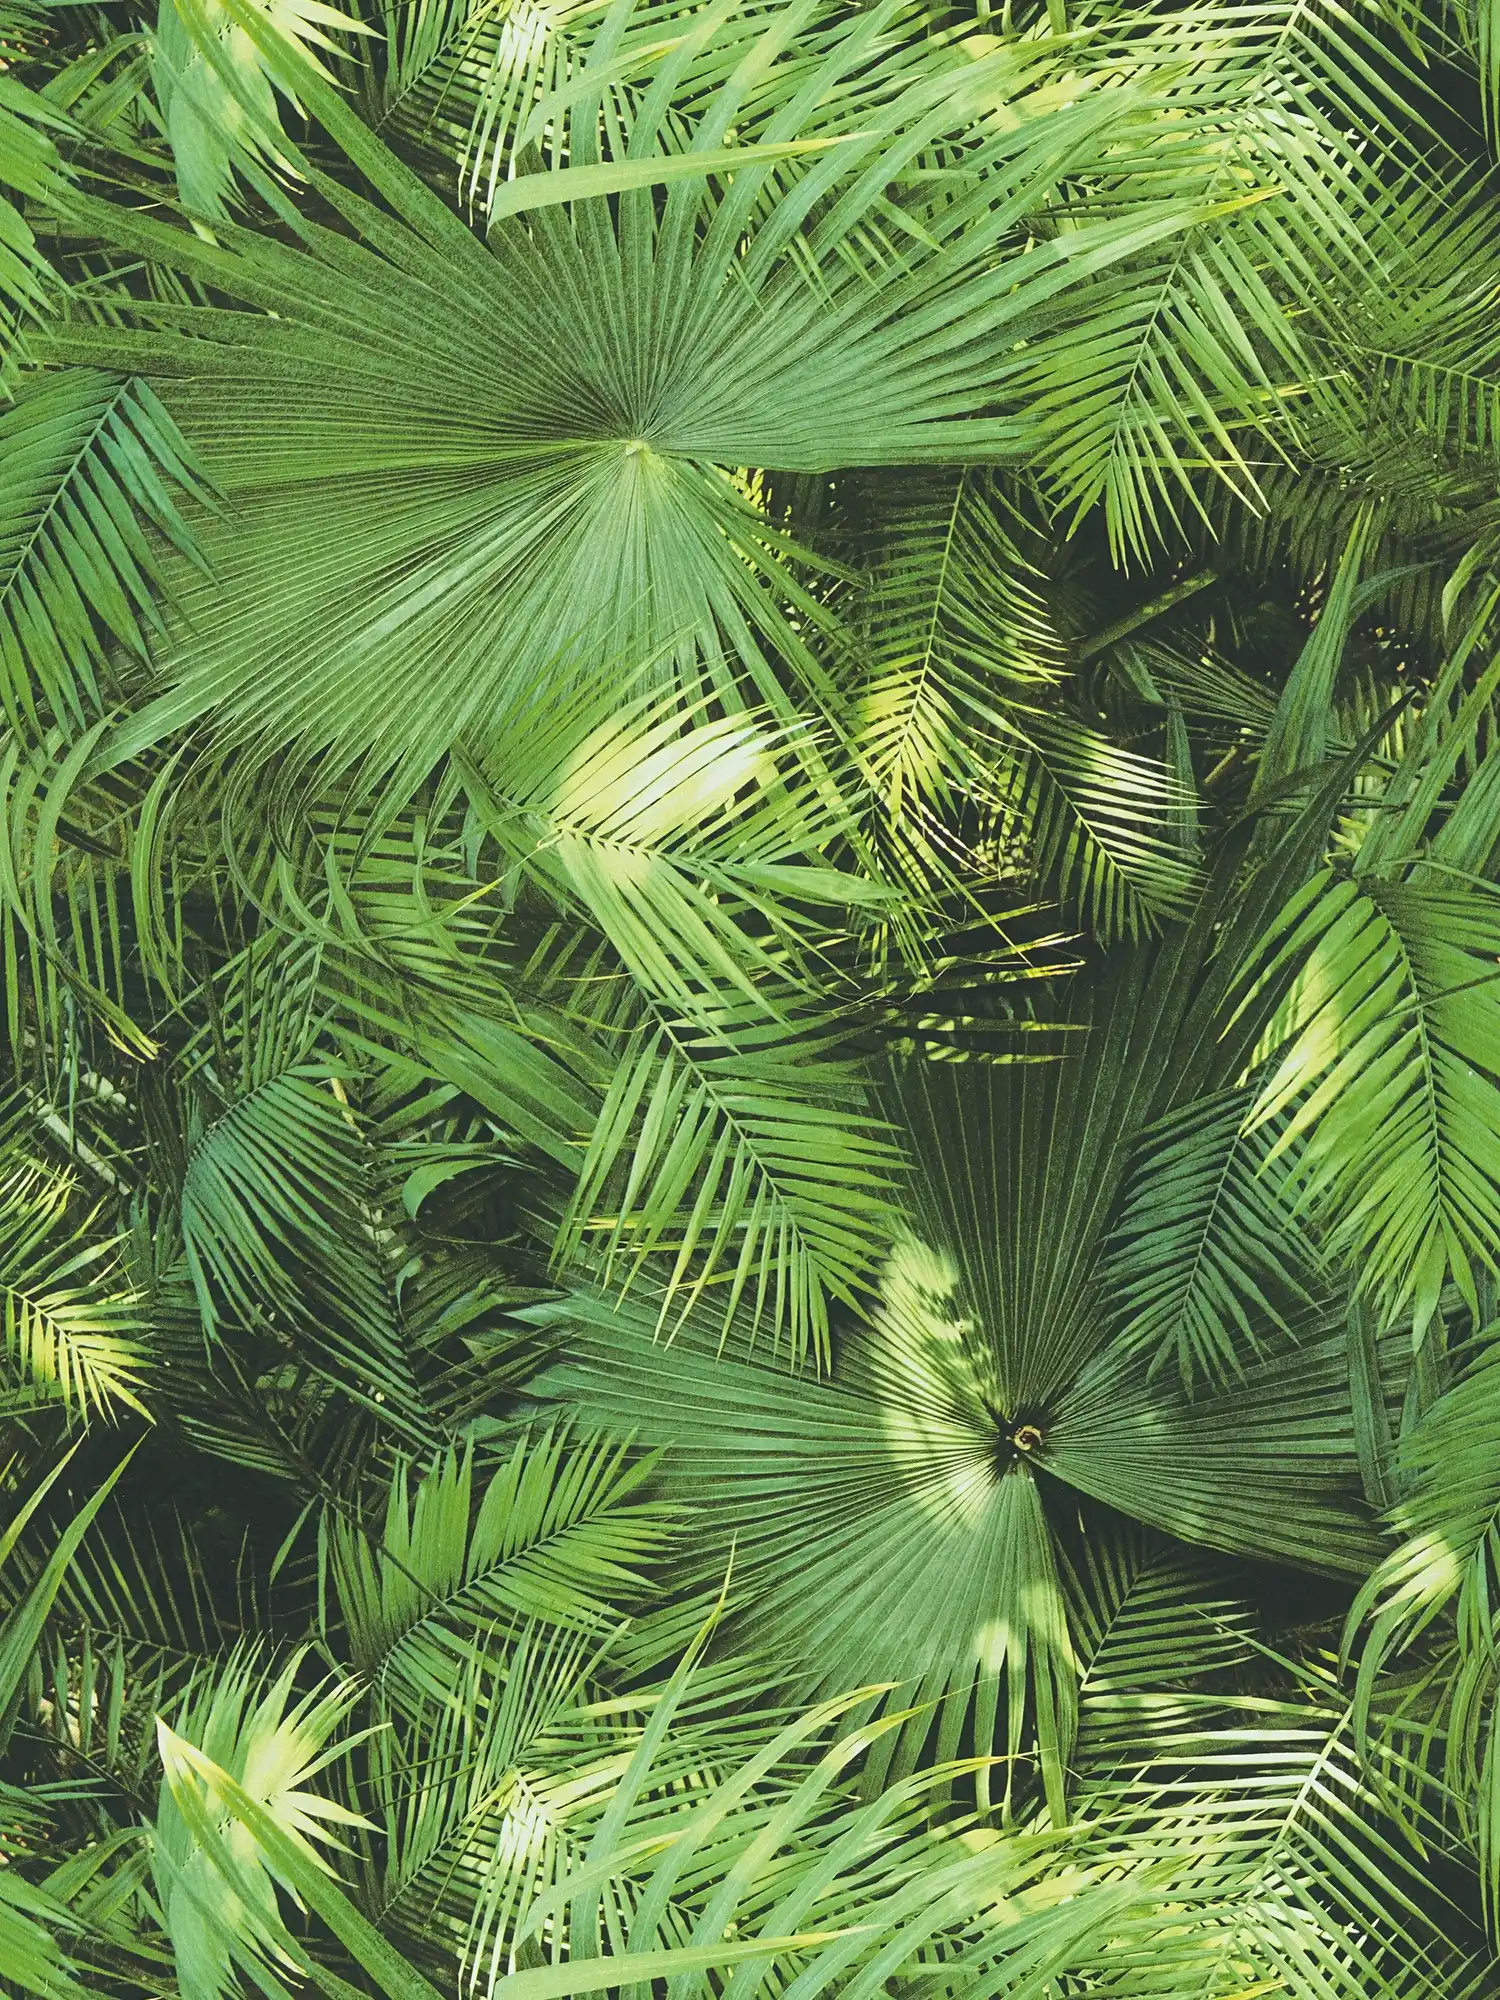 Zelfklevend behang | jungle bladeren patroon groene jungle
